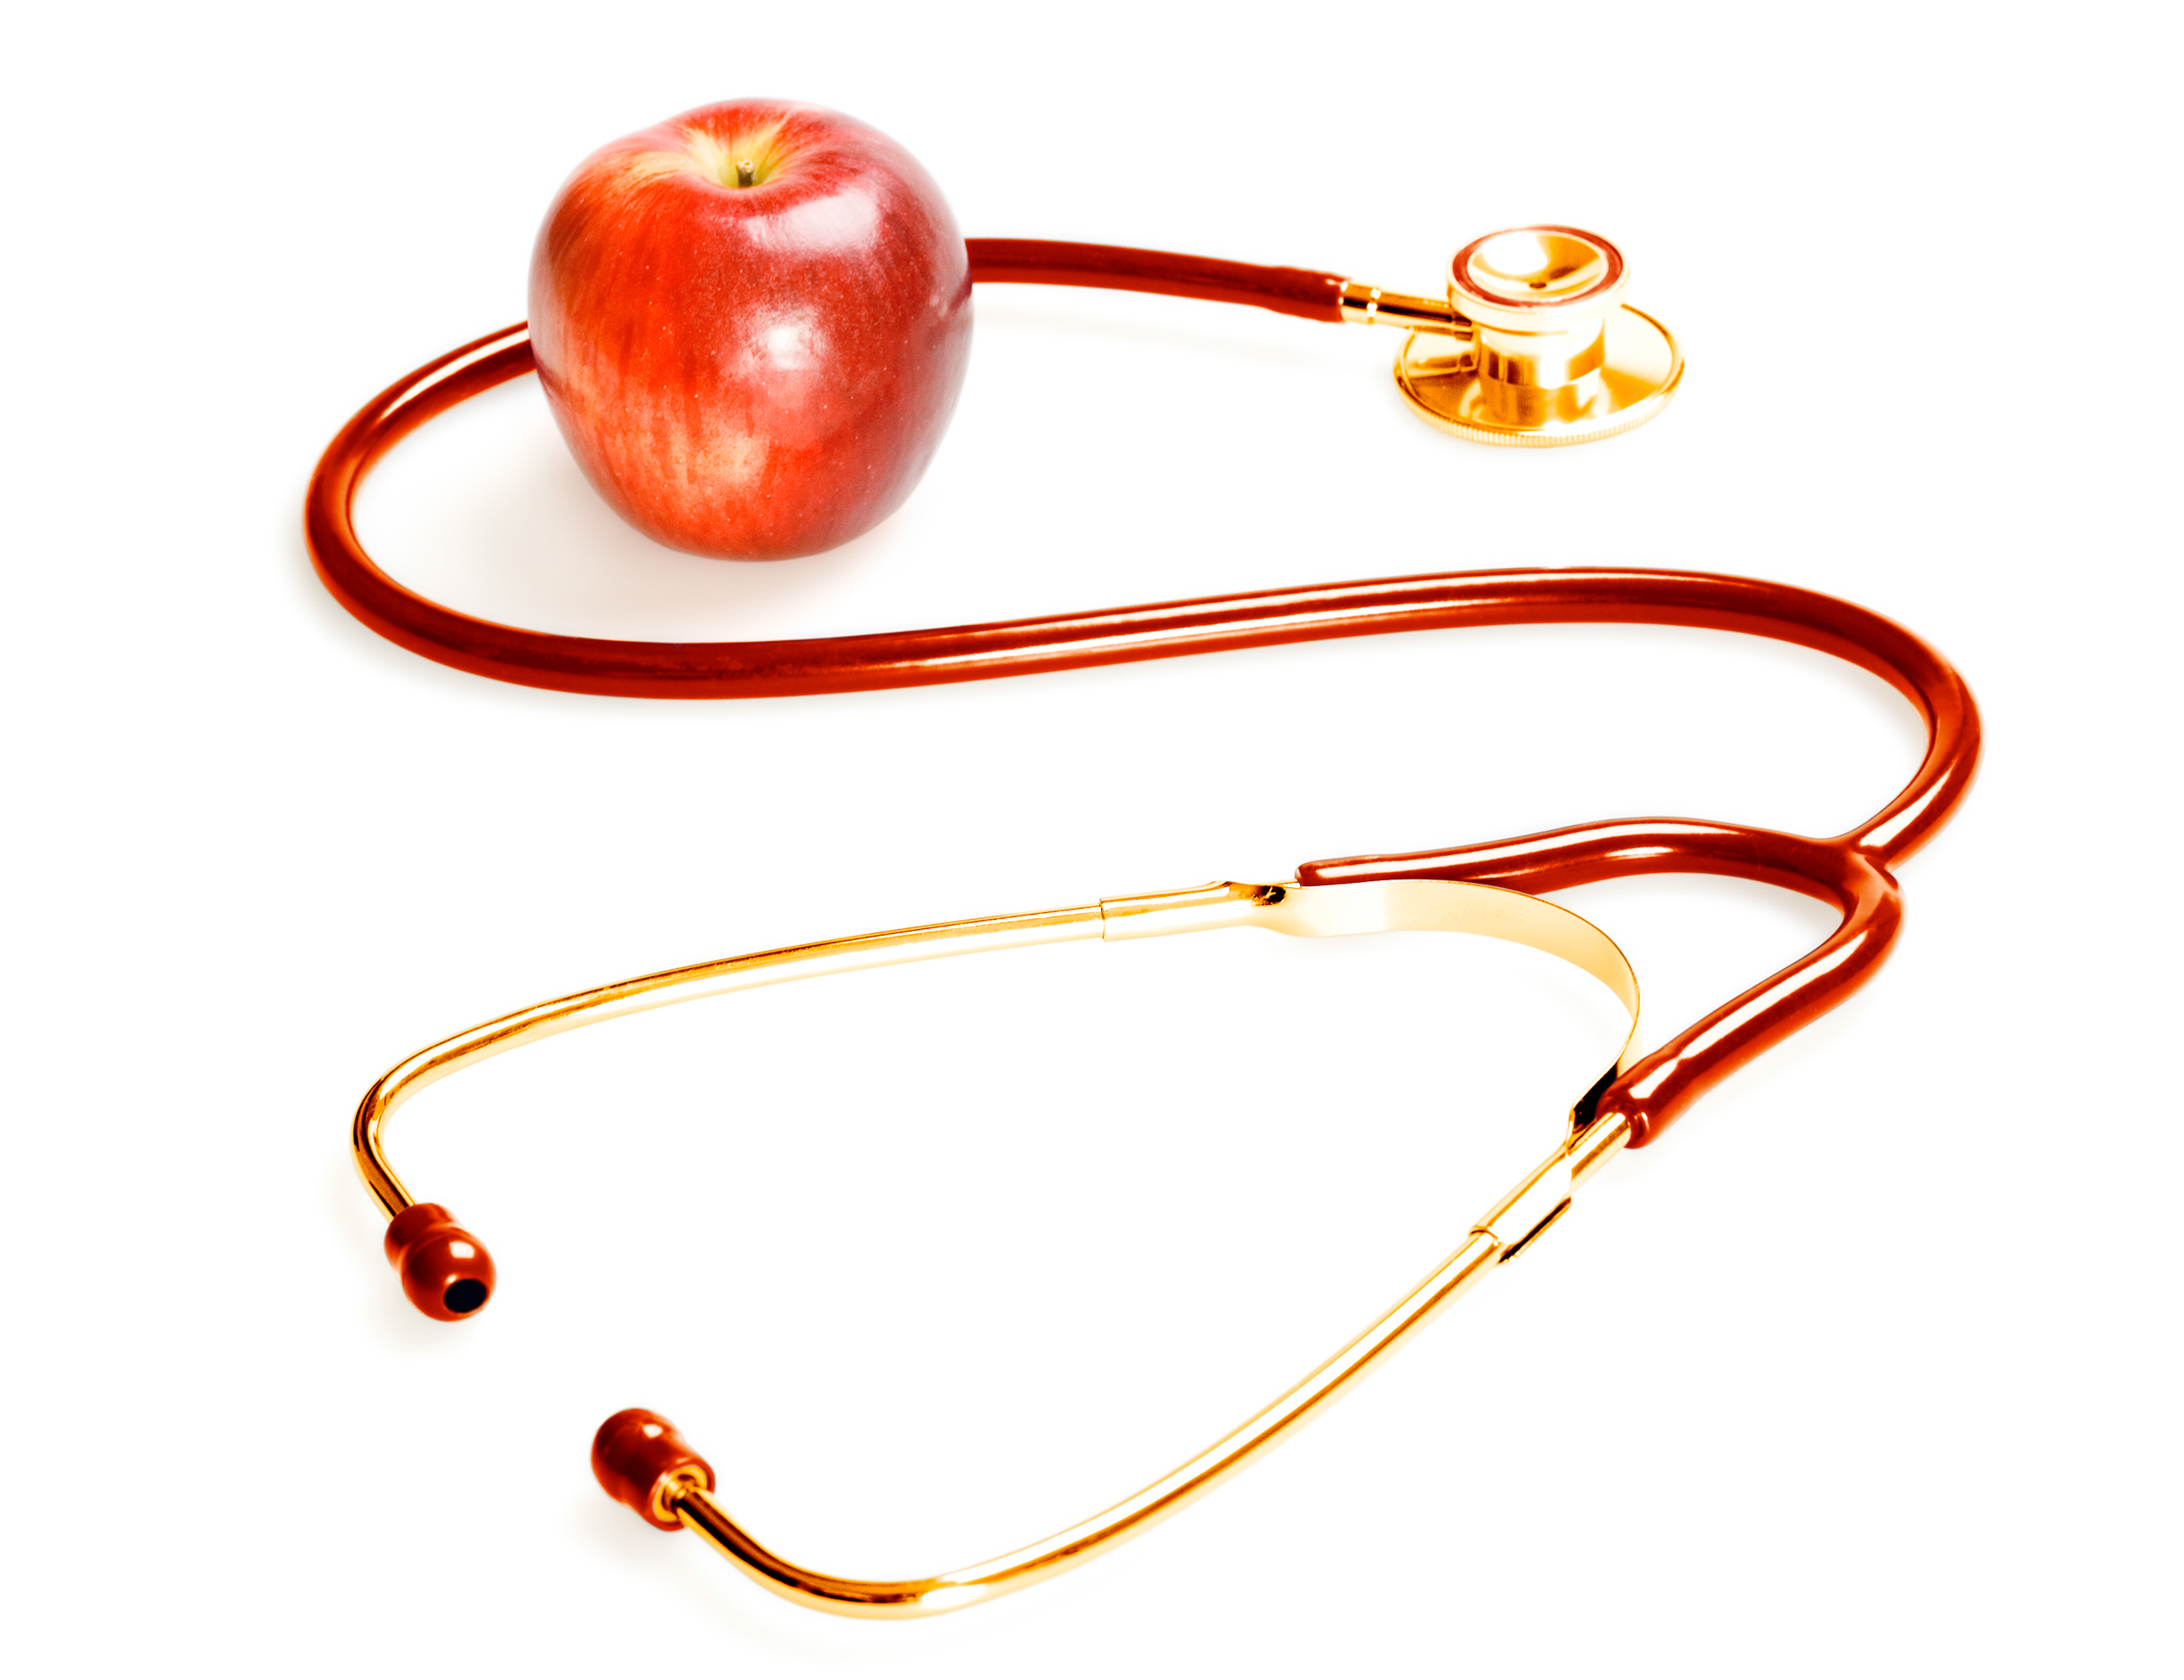 Яблоко с стетоскопом. Яблоко и фонендоскоп. Яблоки в медицине. Картинка яблоко и стетофонендоскопа. Яблоко в медицине